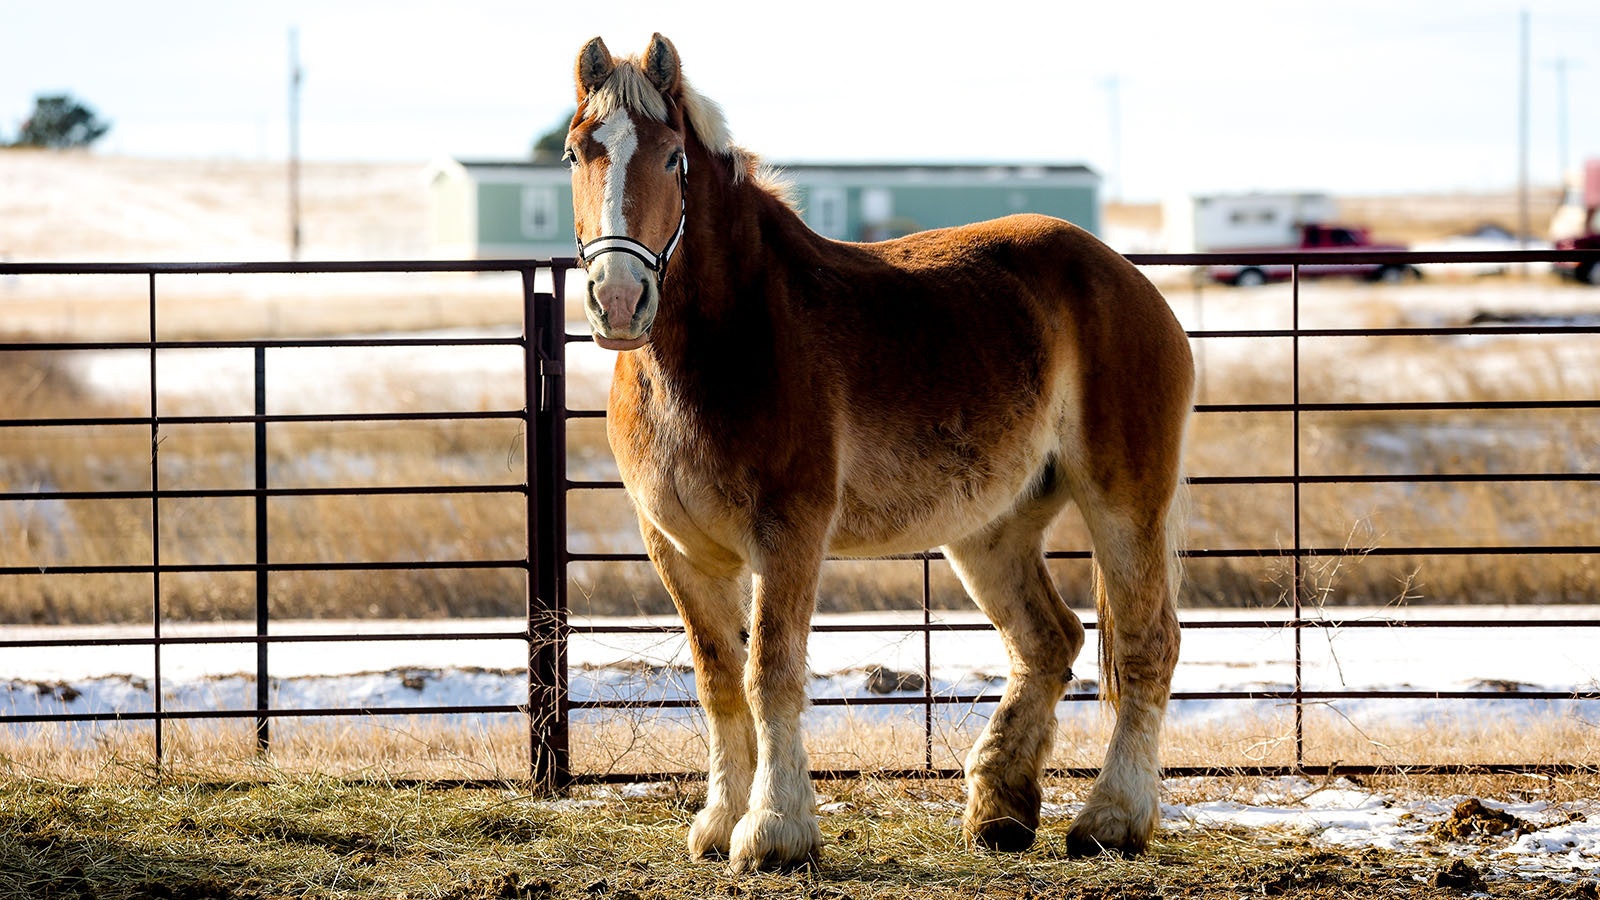 Summer is a draft horse up for adoption through the Broken Bandit Wildlife Center near Cheyenne.